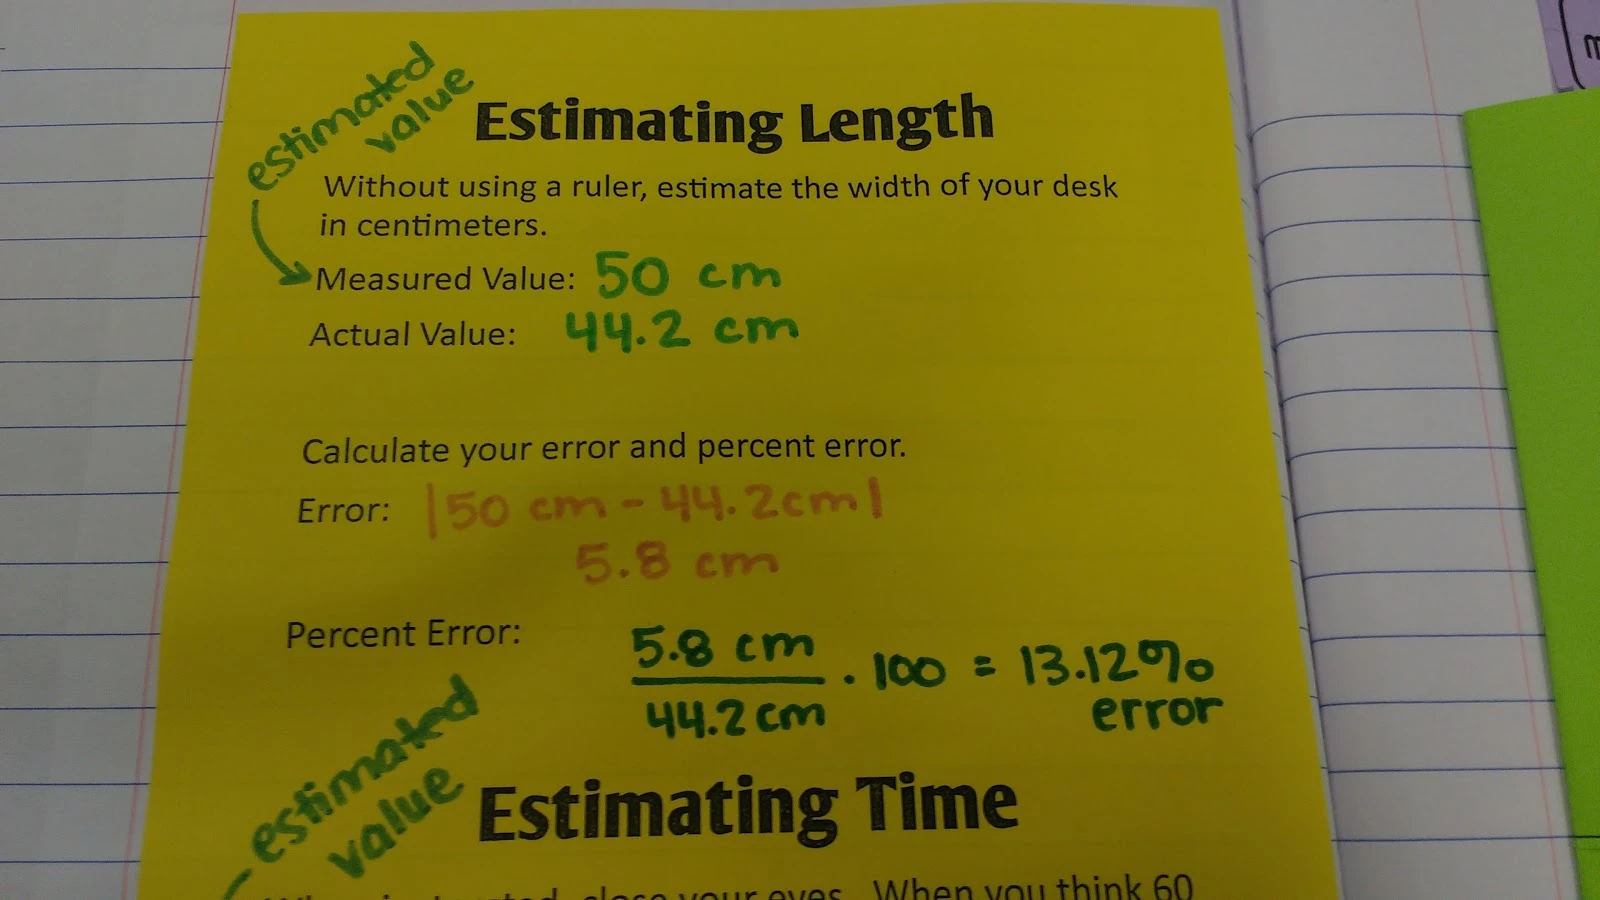 estimating length mini lab for calculating error and percent error. 